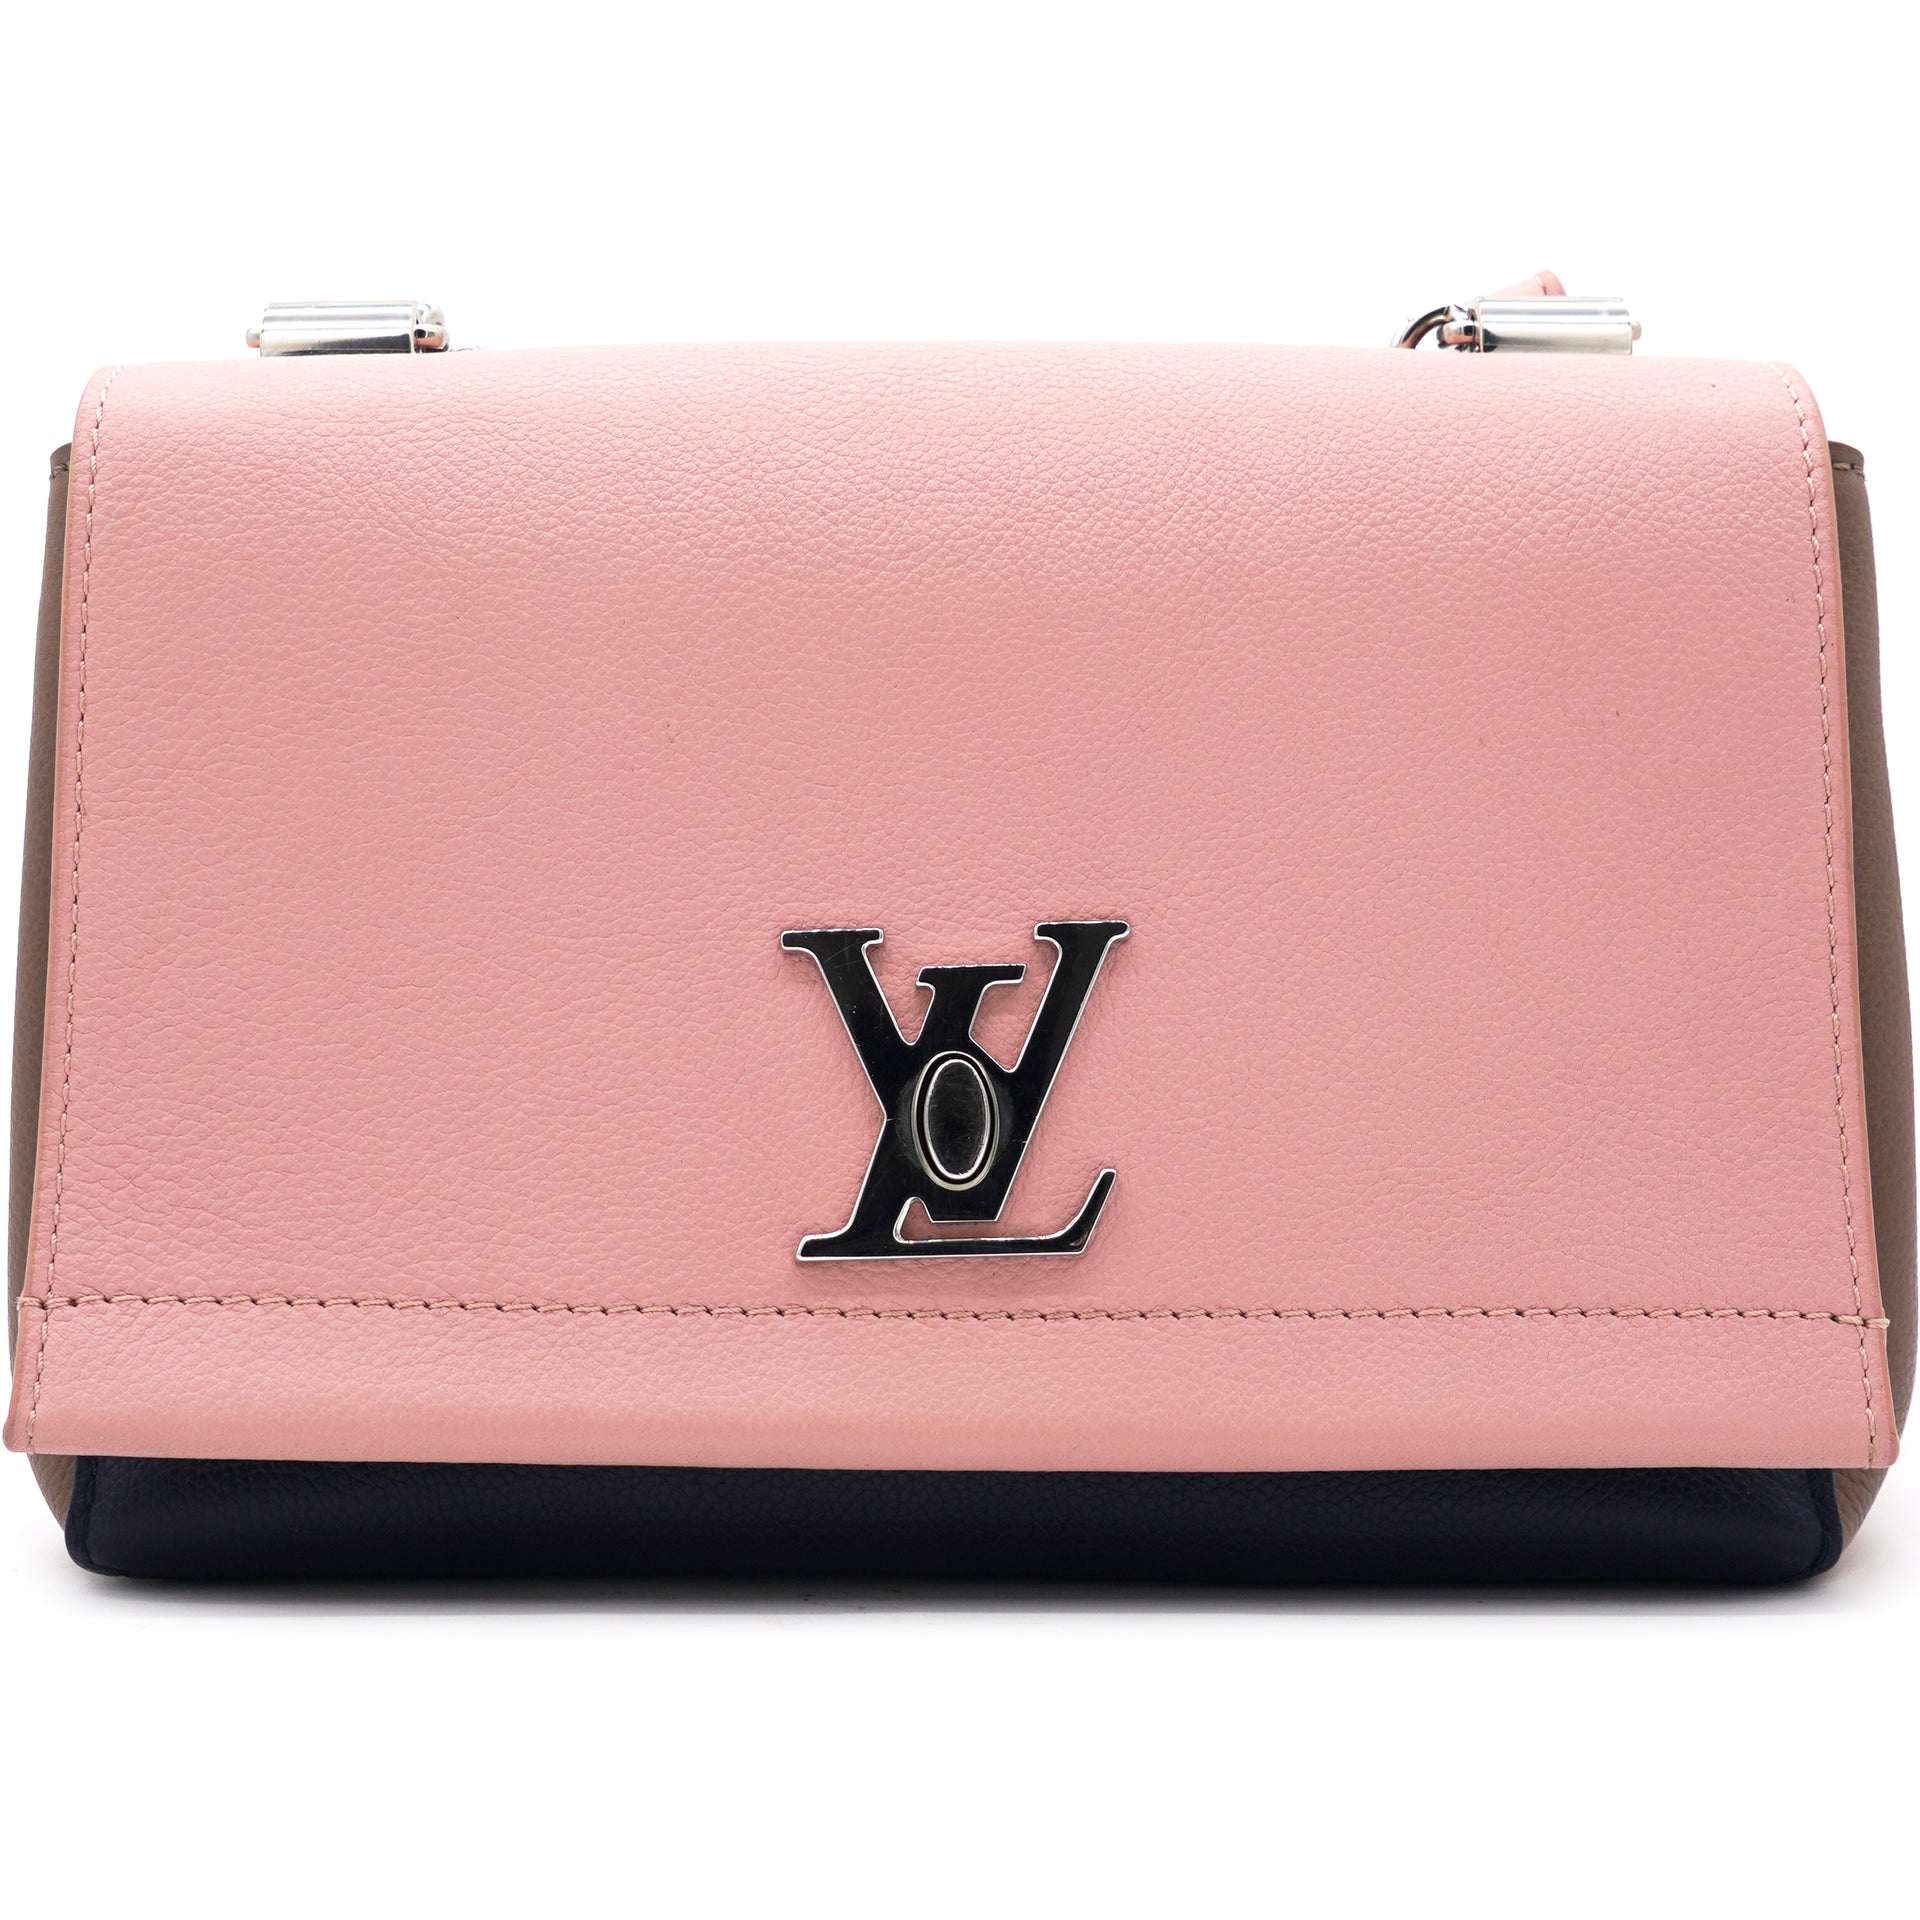 Louis Vuitton Lockme II Handbag - Red Leather Silver Hardware +